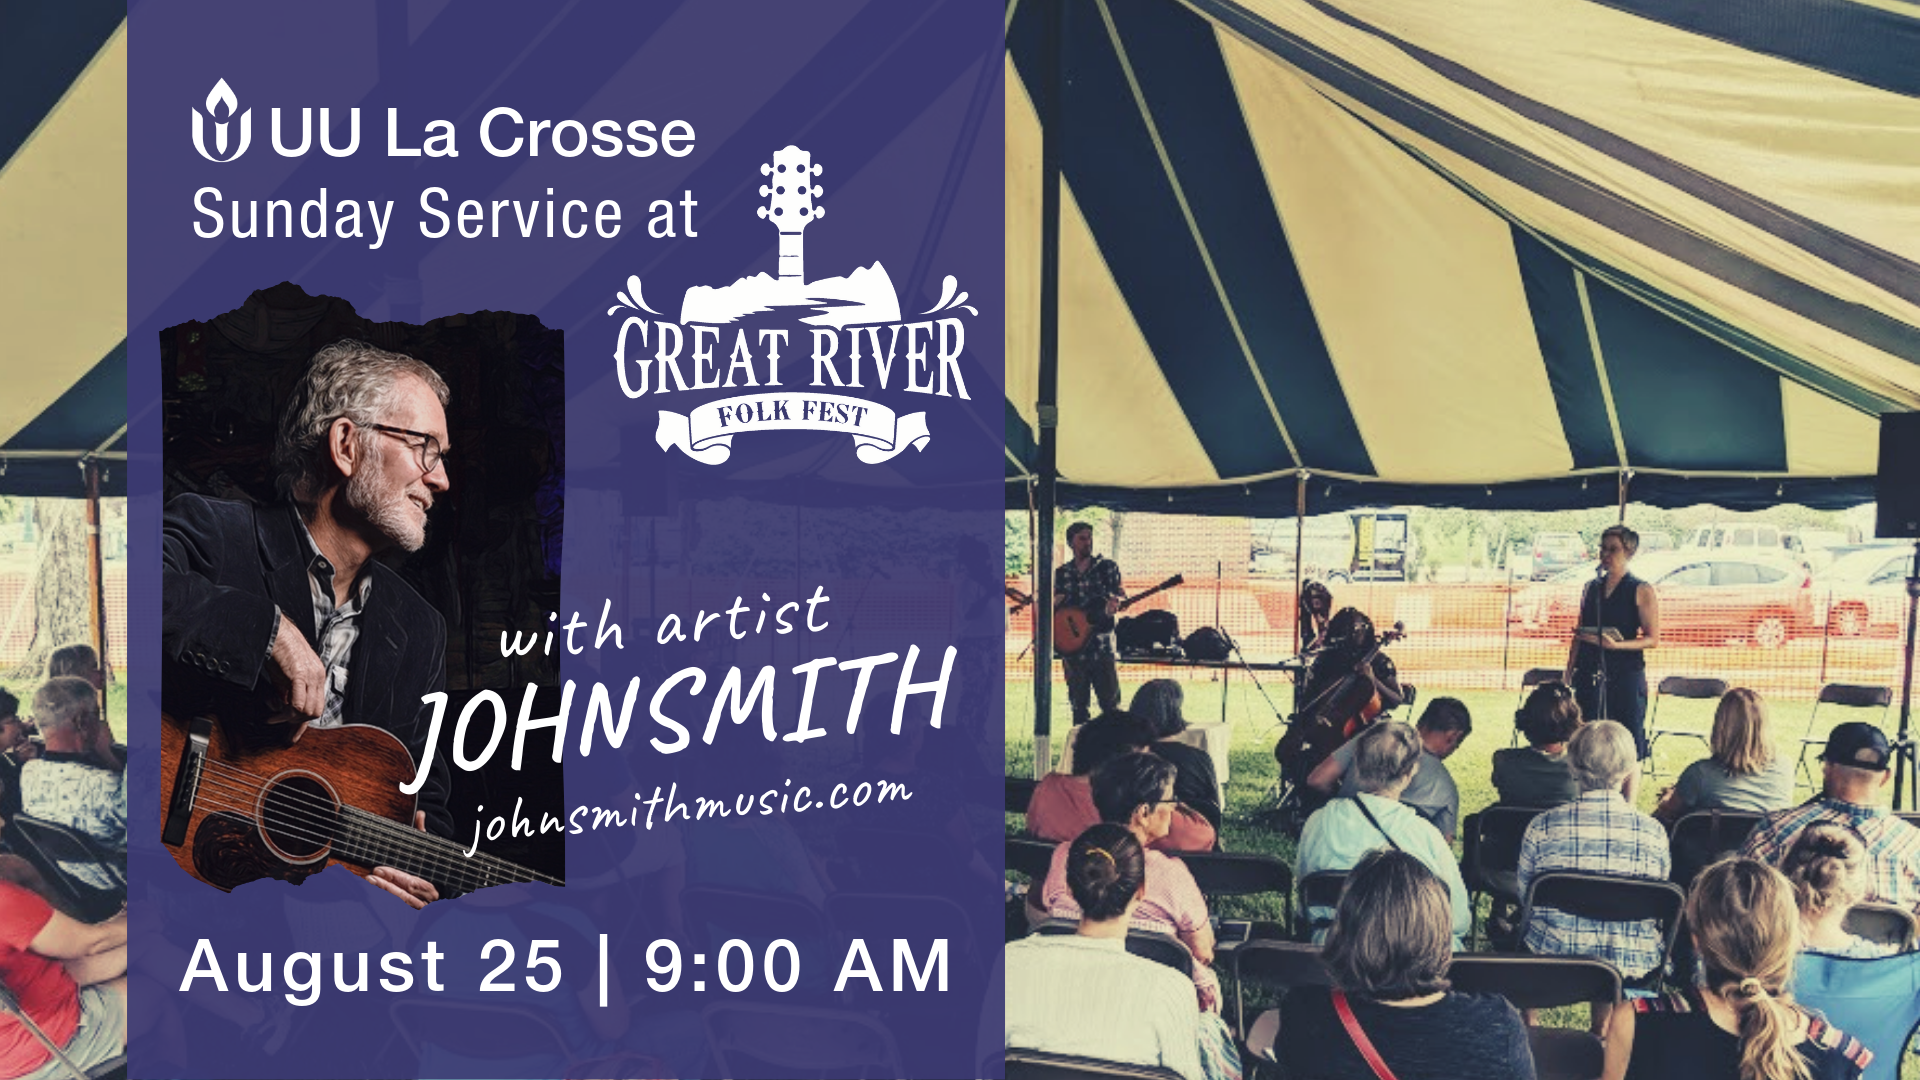 Great River Folk Fest Service with artist JOHNSMITH